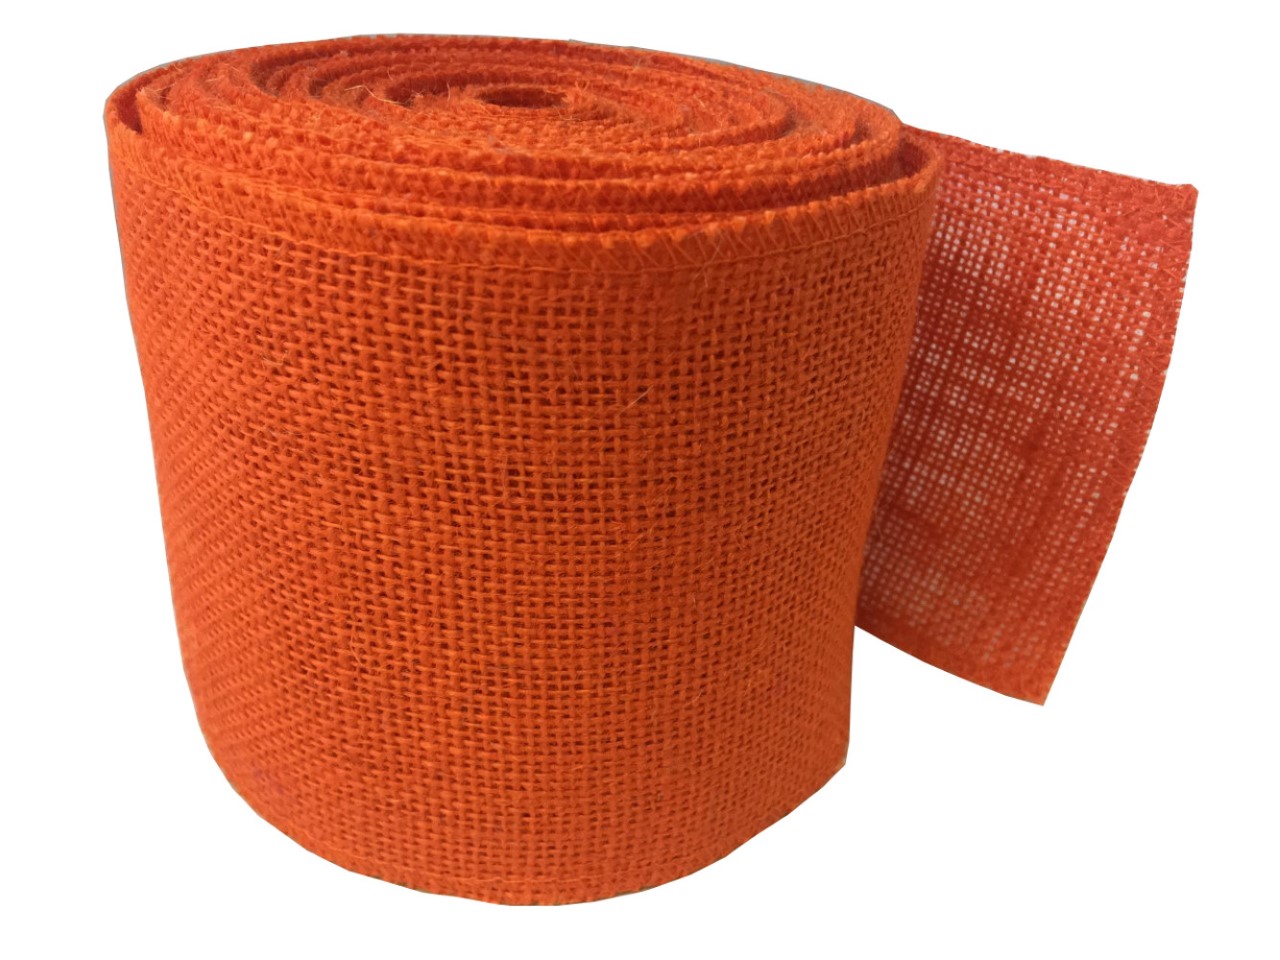 4" Tangerine Burlap Ribbon - 10 Yards (Sewn Edges) Made in USA